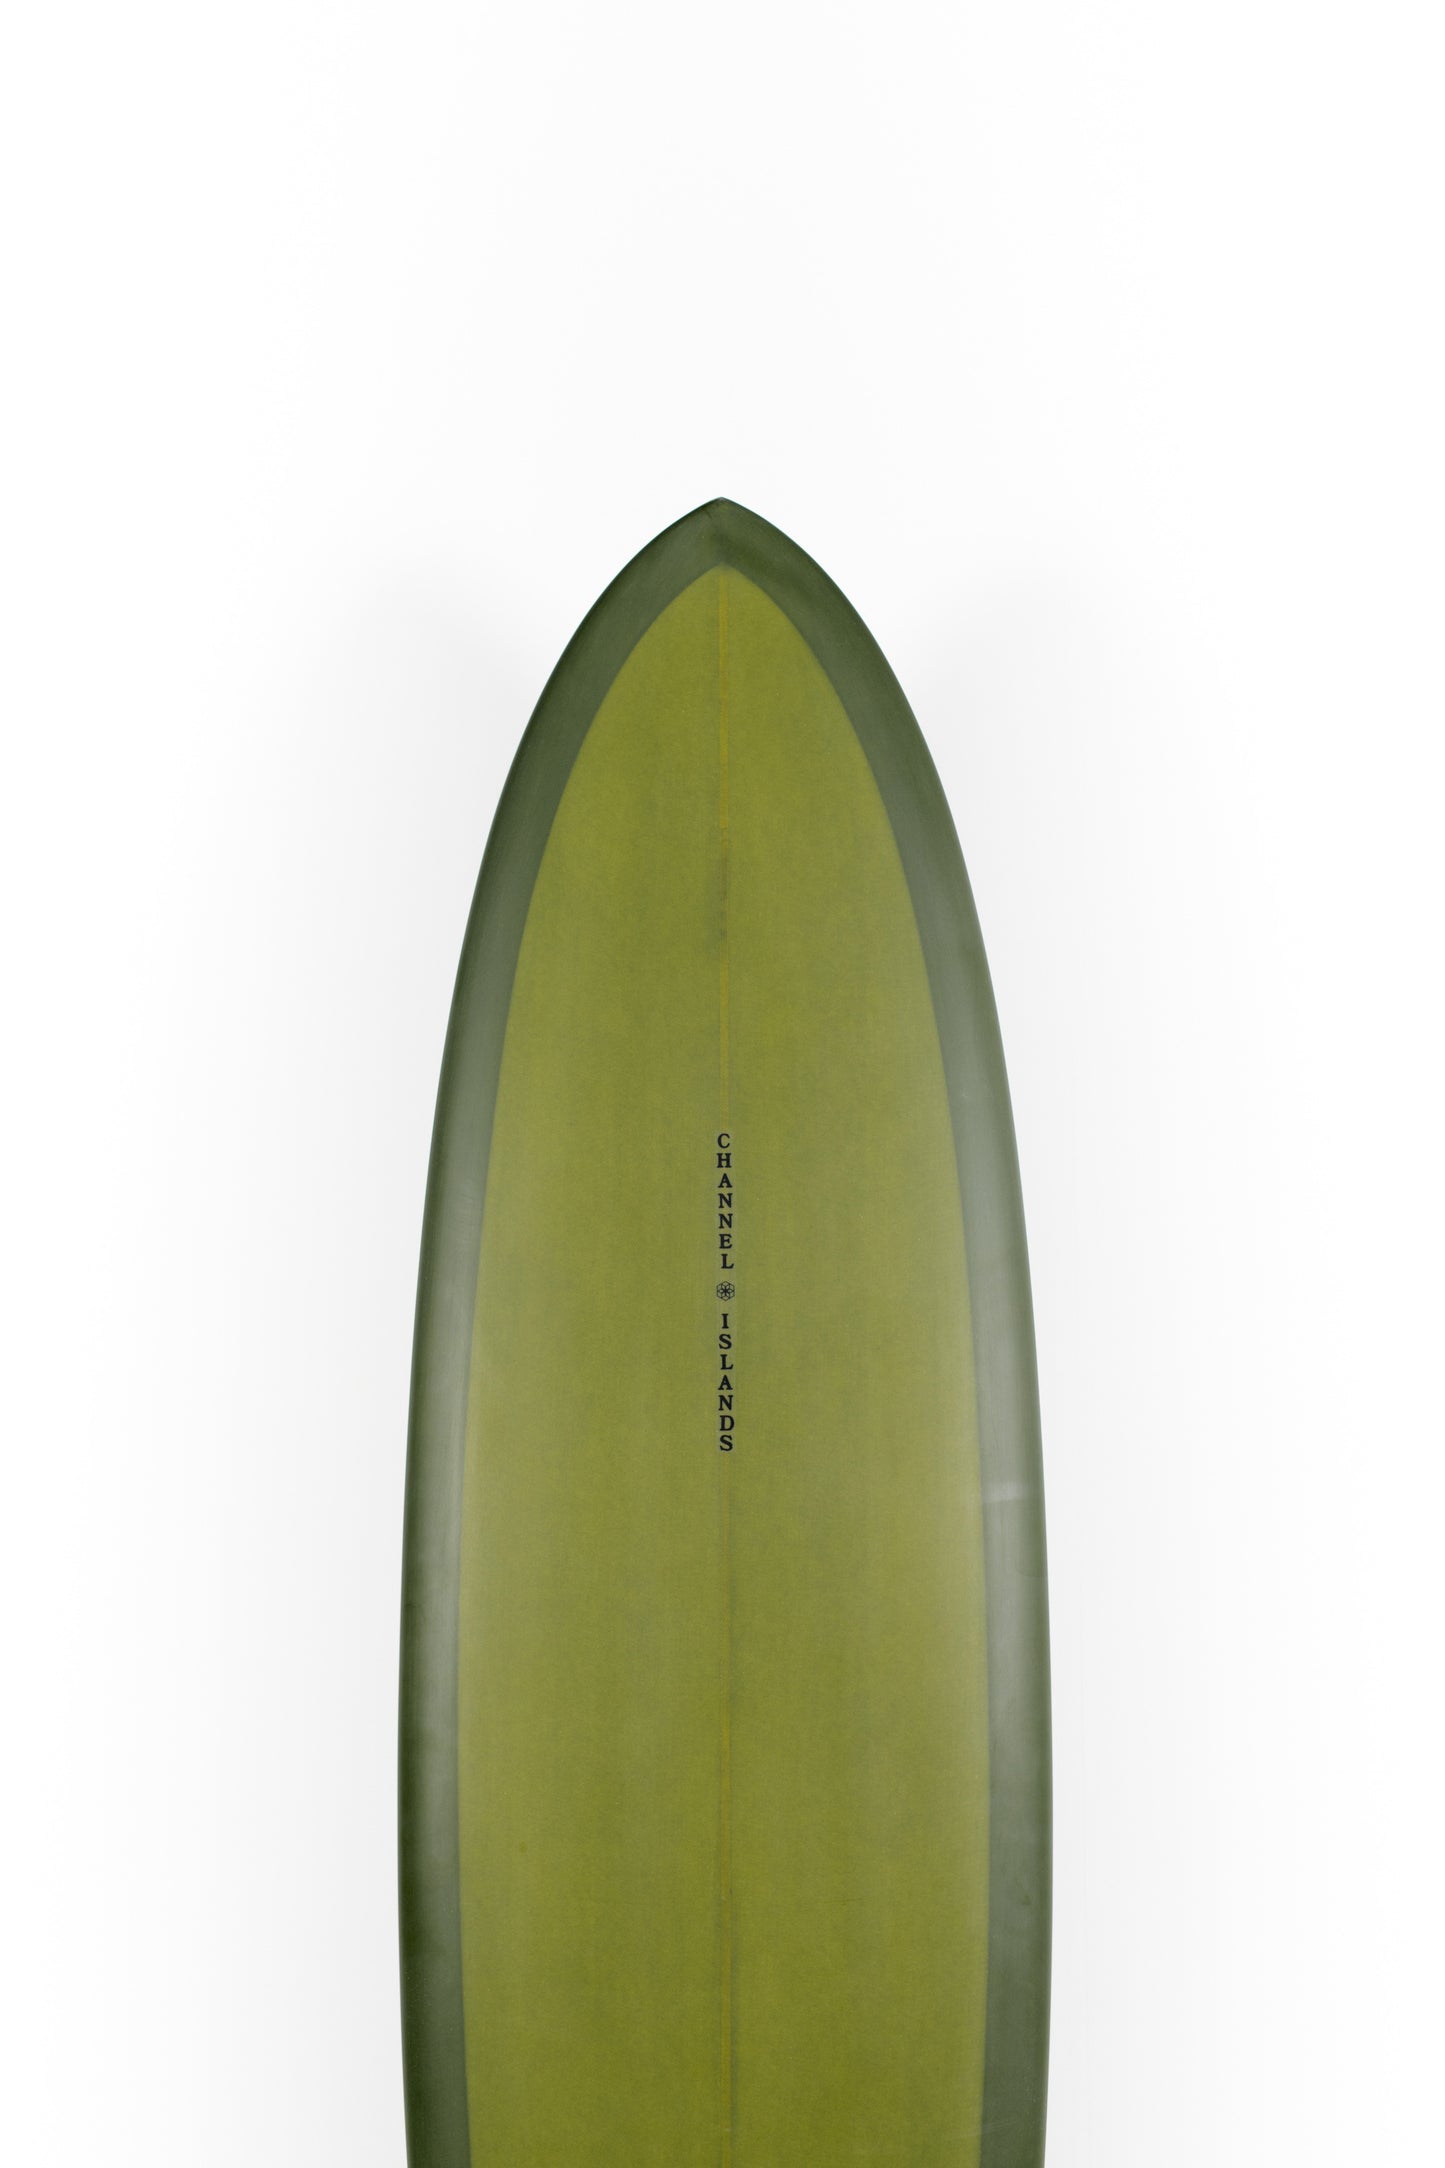 
                  
                    Pukas Surf Shop - Channel Islands - TRI PLANE HULL by Britt Merrick - 7'1" x 21 3/8 x 2 13/16 - 47,9L - CI24154
                  
                